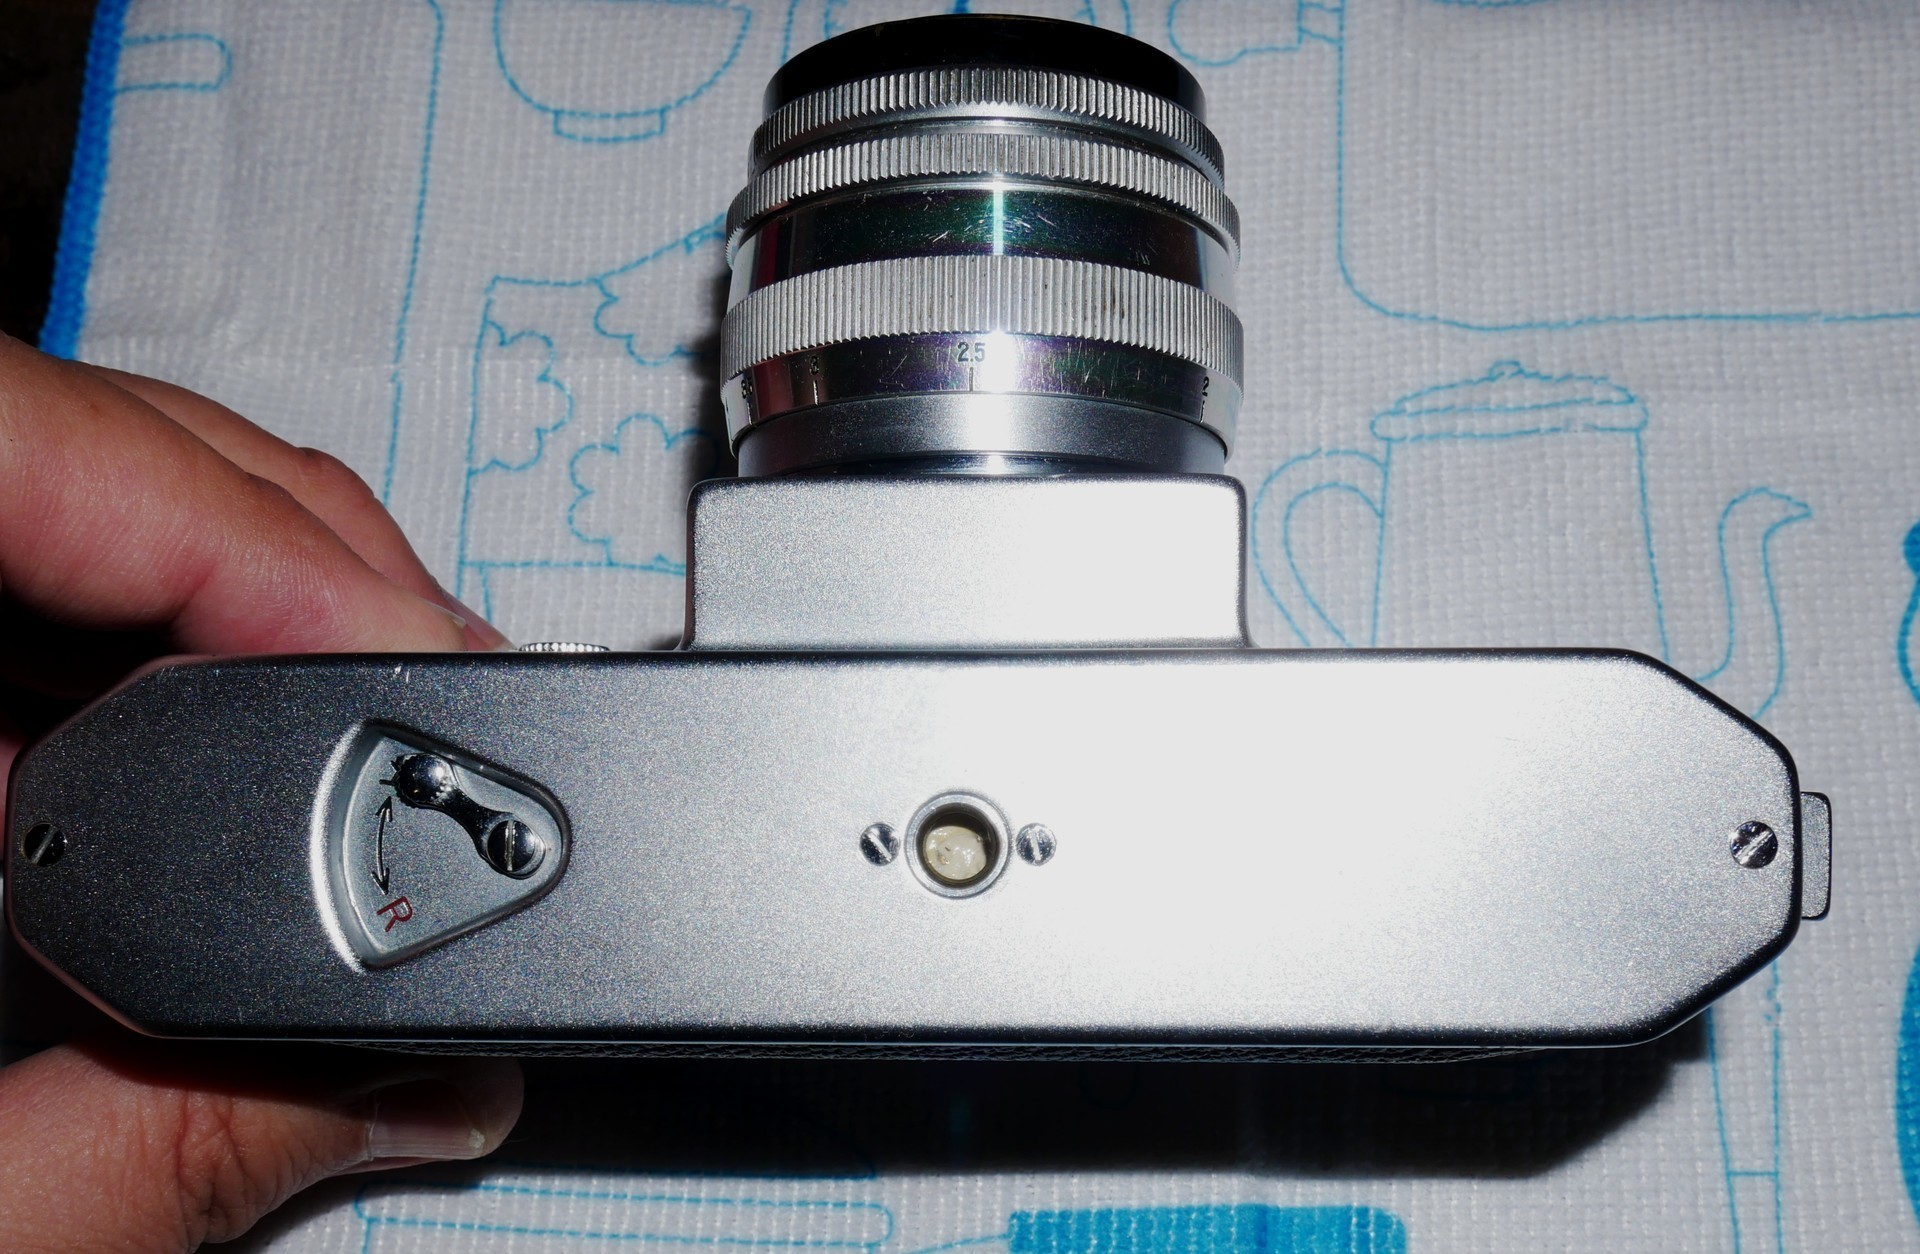 Asahiflex カメラ　レンズ　など関連用品　セット【ジャンク品】